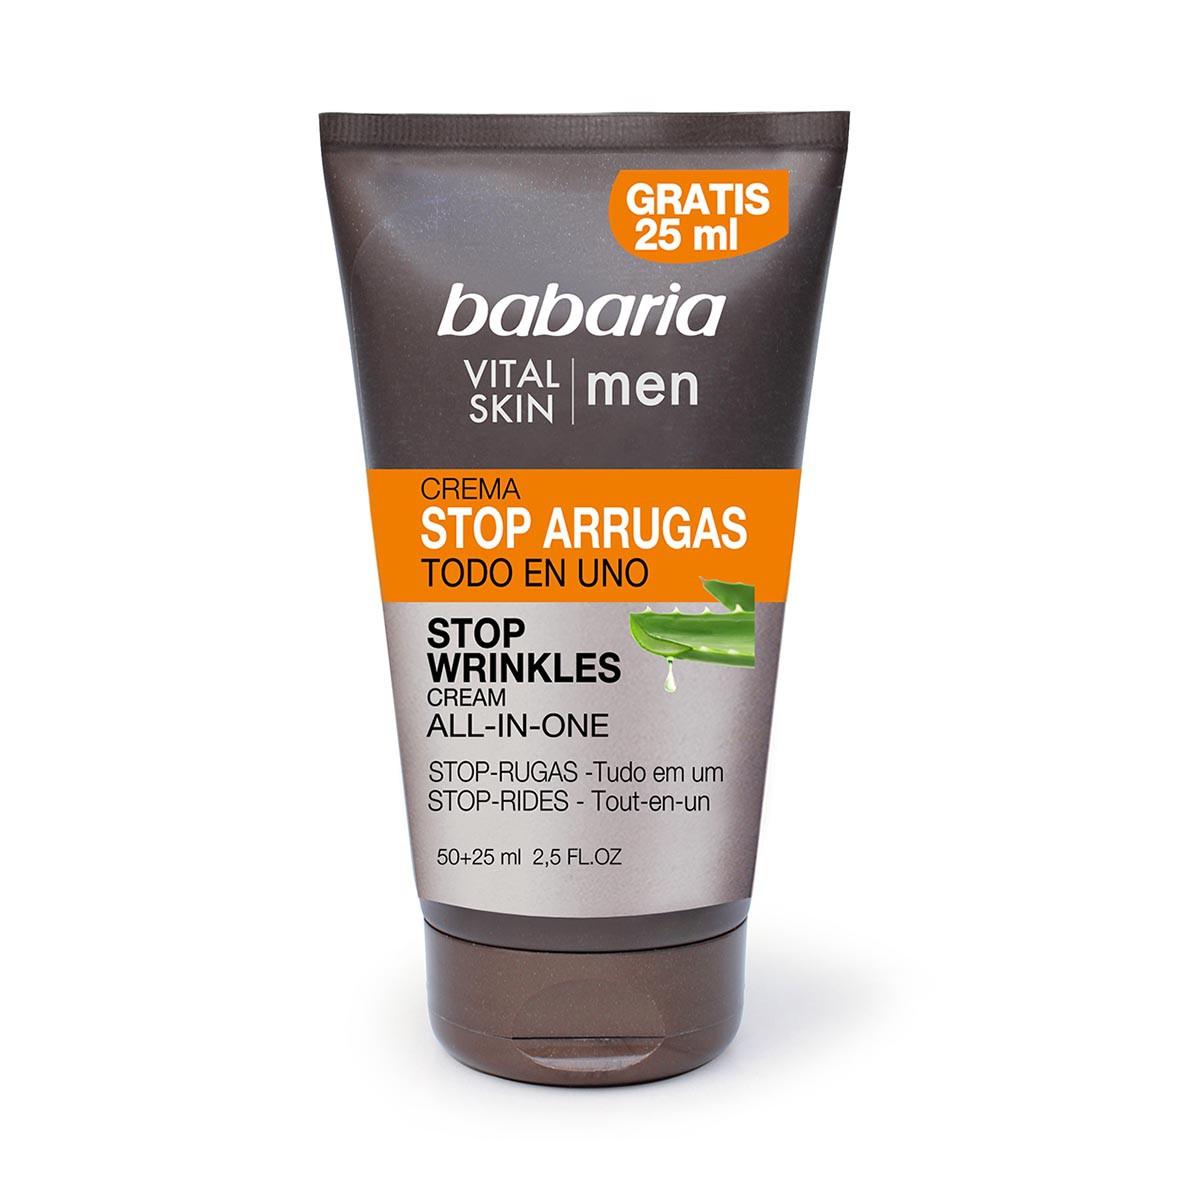 babaria-men-vital-skin-wrinkles-stop-all-in-one-cream-50-25ml